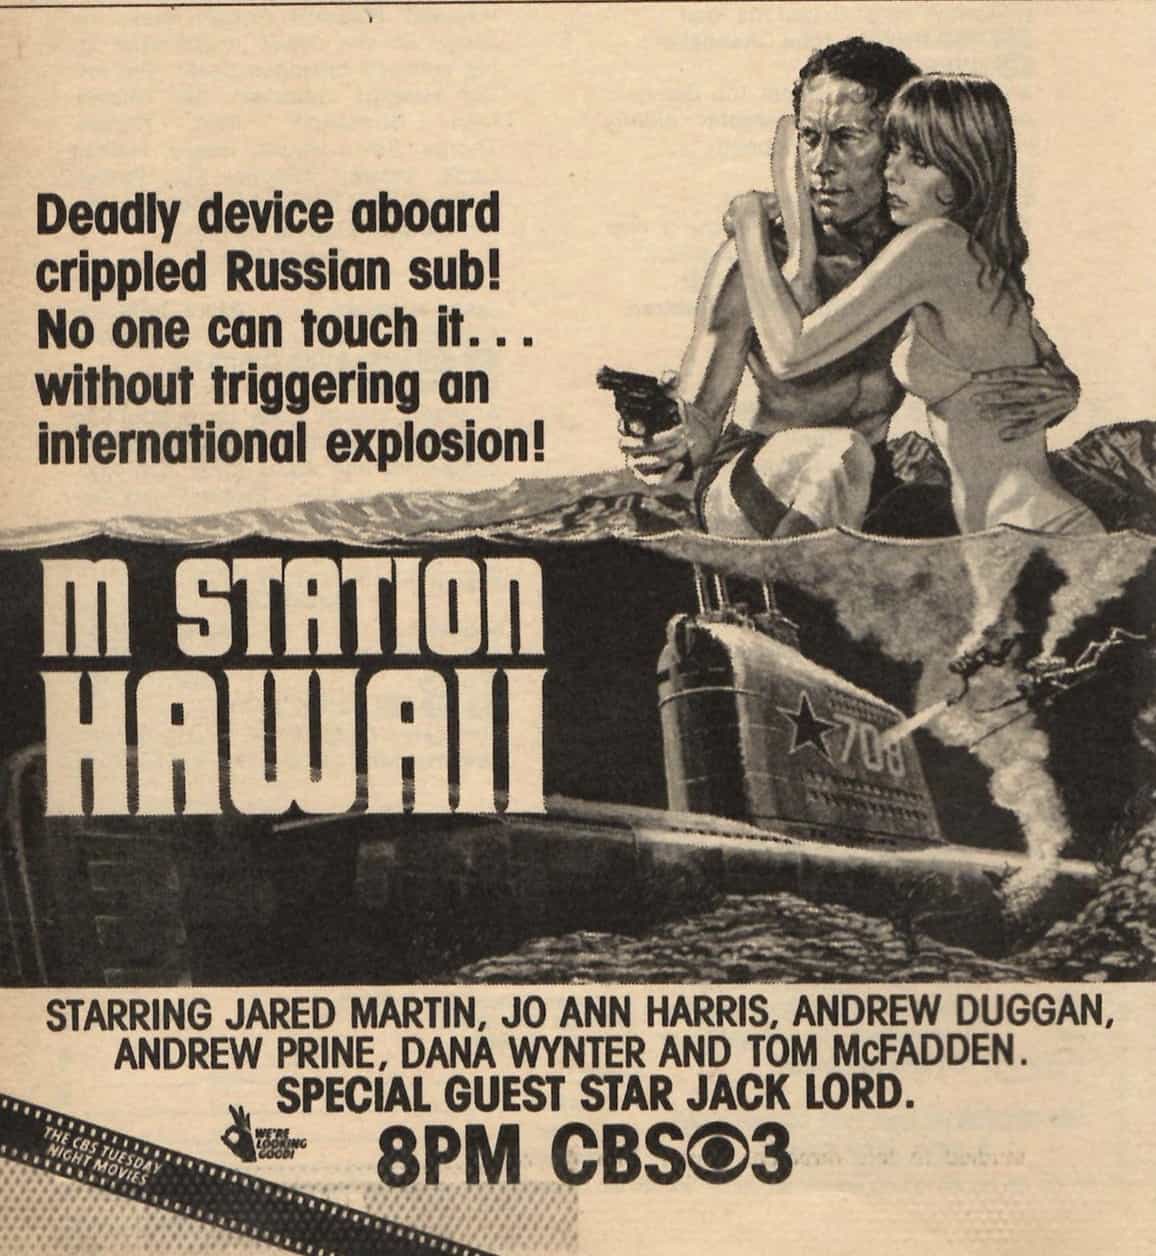 M Station: Hawaii